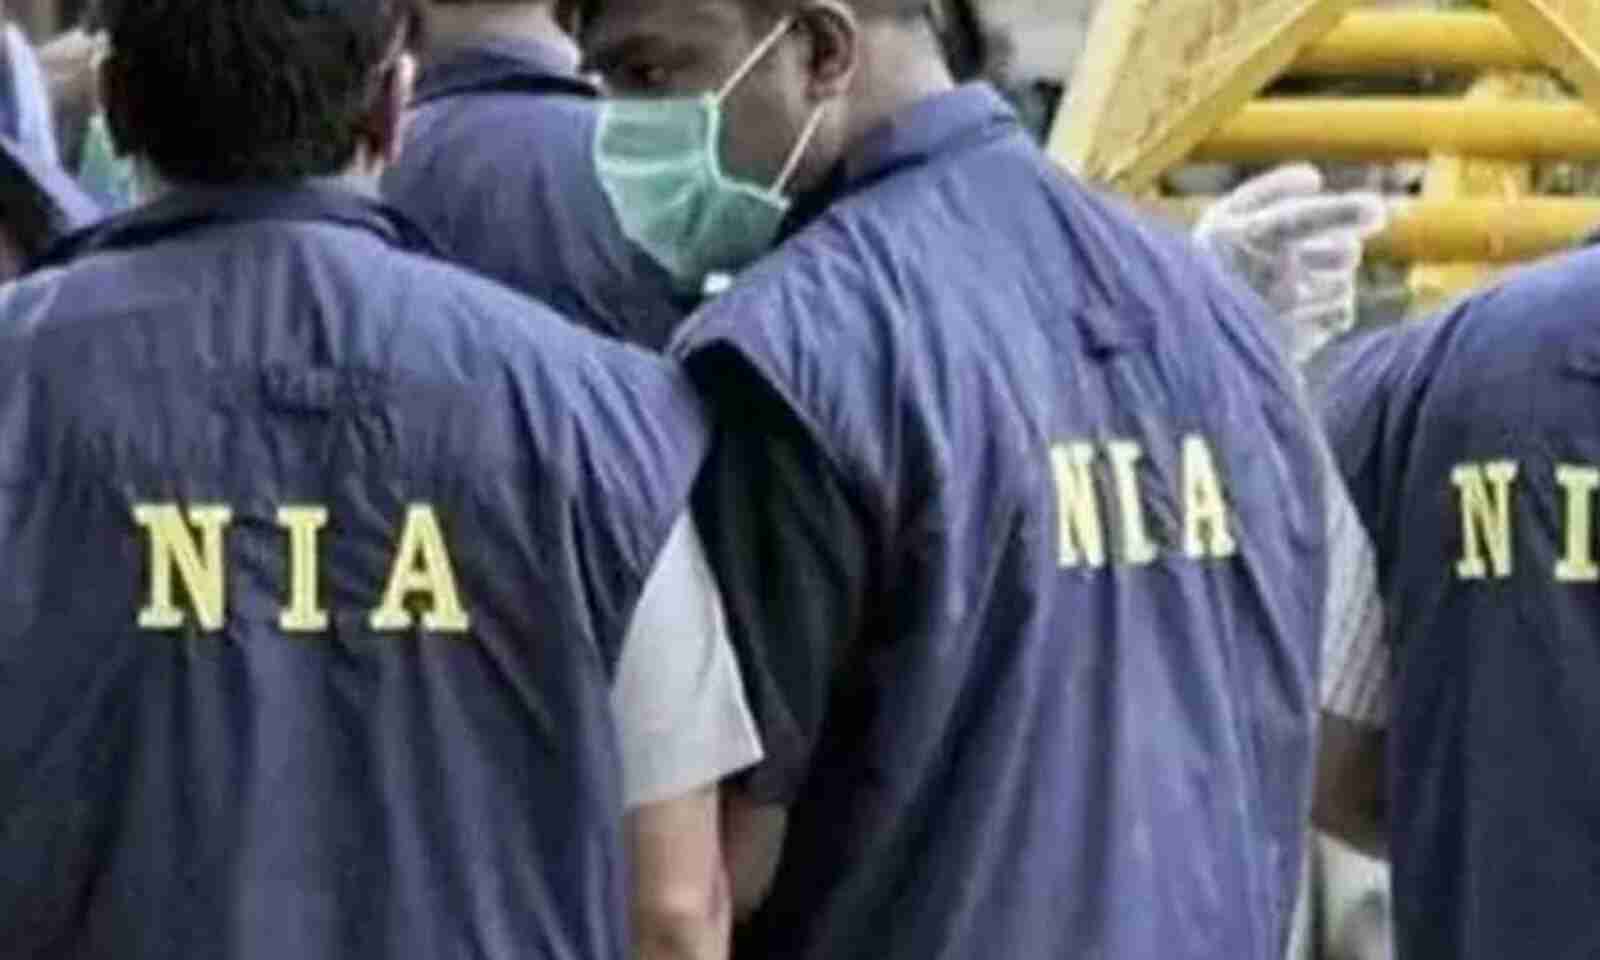 NIA raids underway at 45 places across Tamil Nadu in Coimbatore blast case